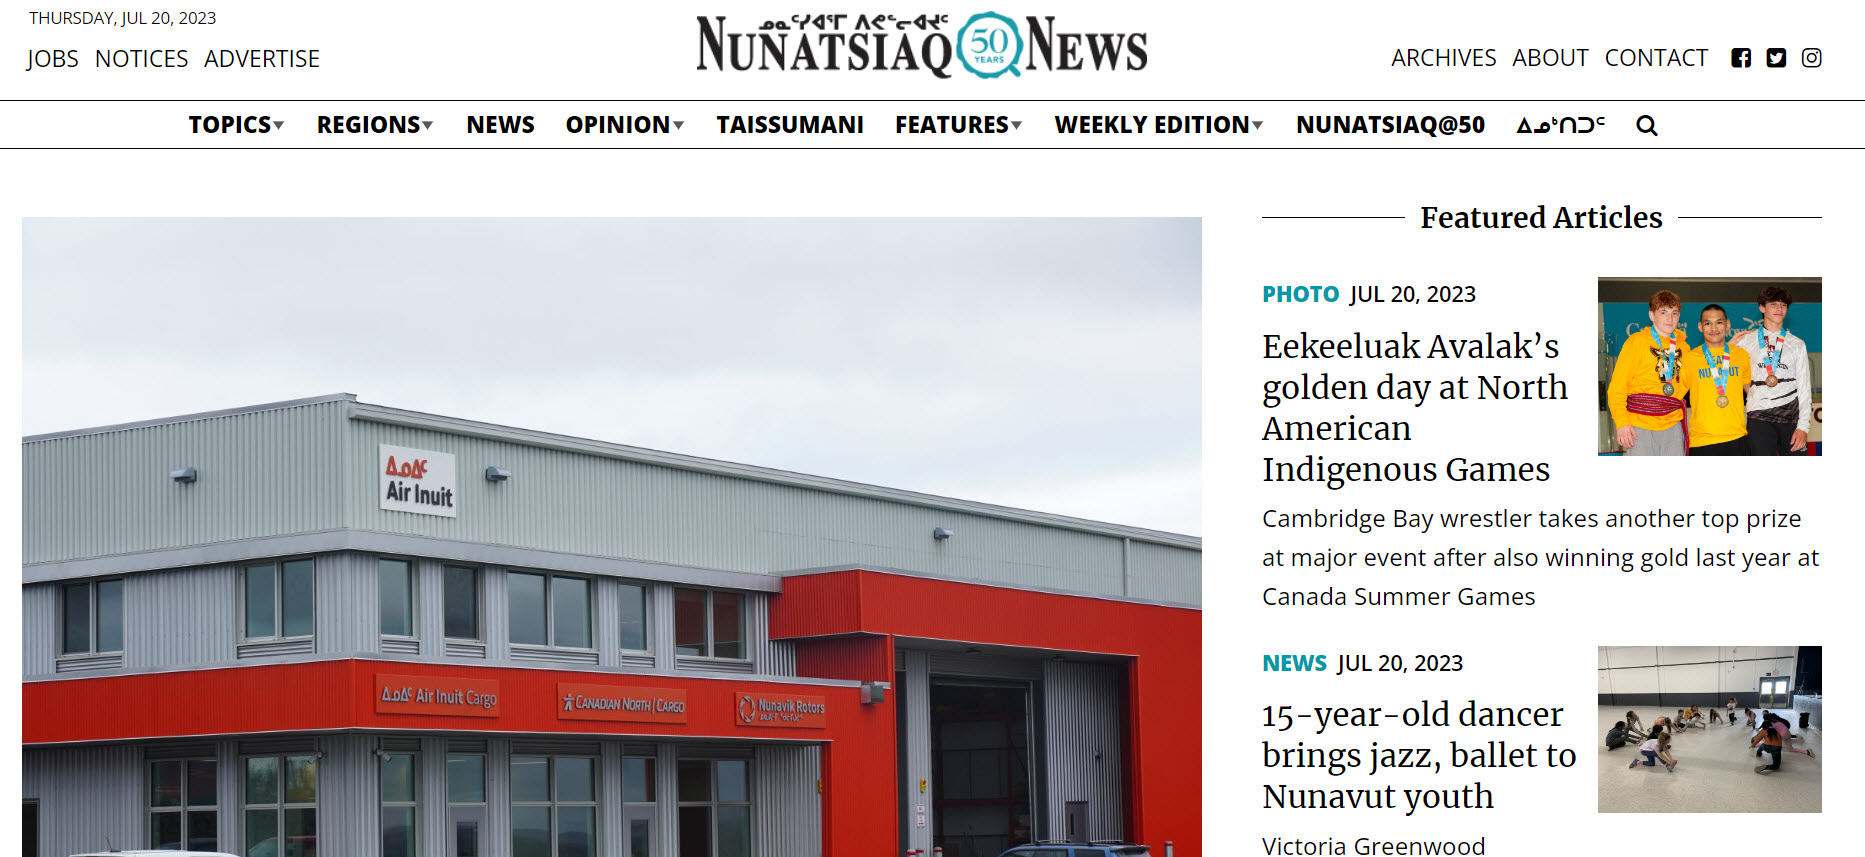 Nunatsiaq News web page showing news for July 20, 2023